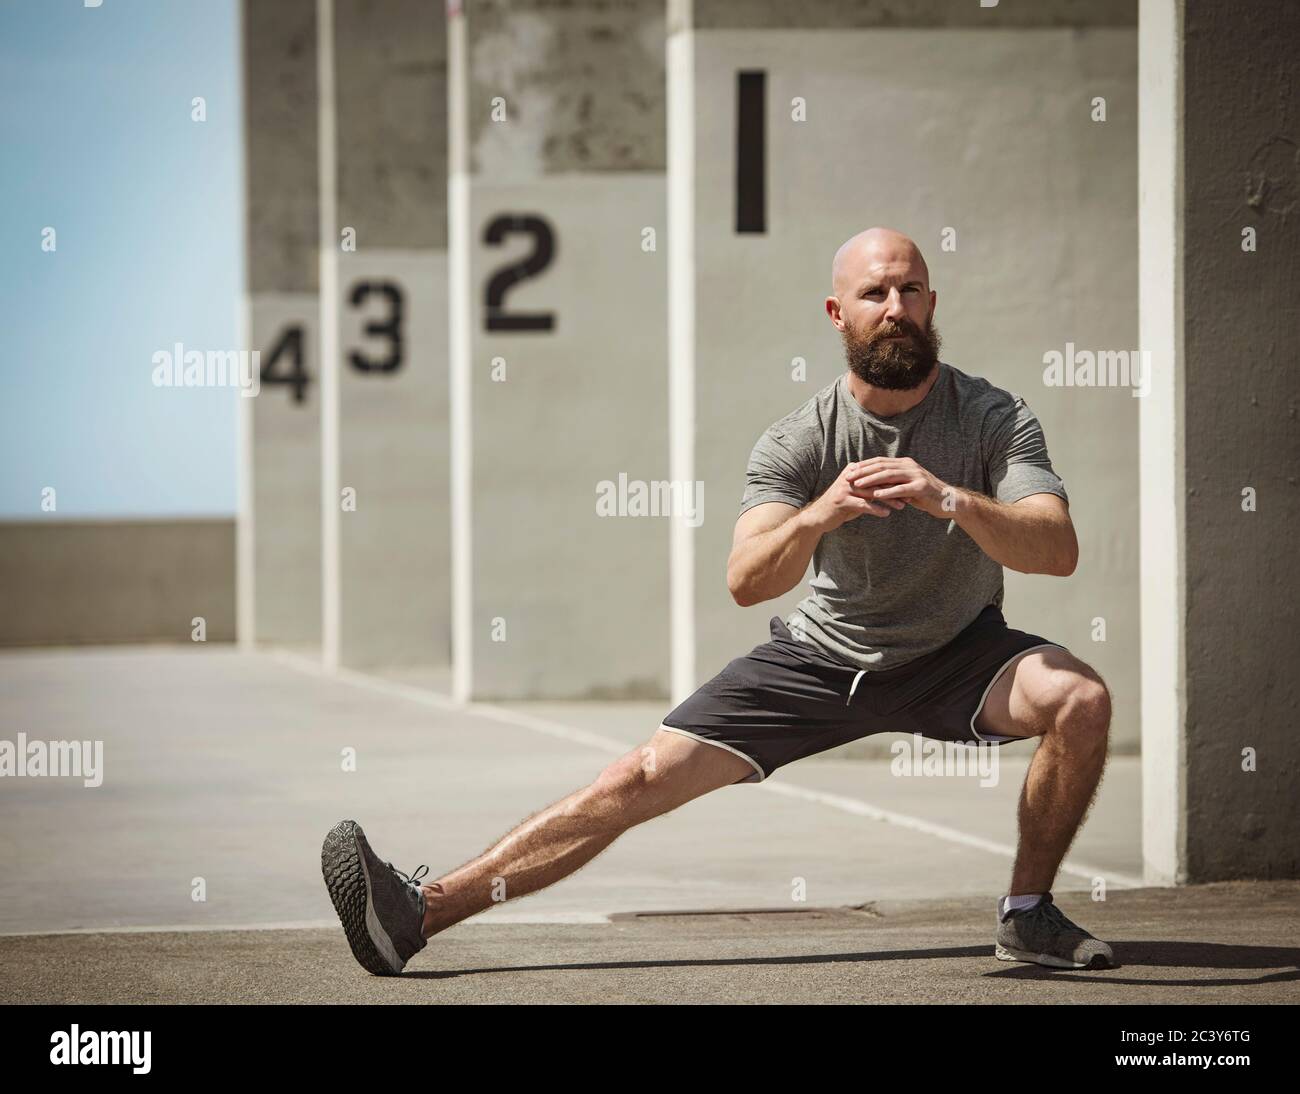 Man stretching during training Stock Photo